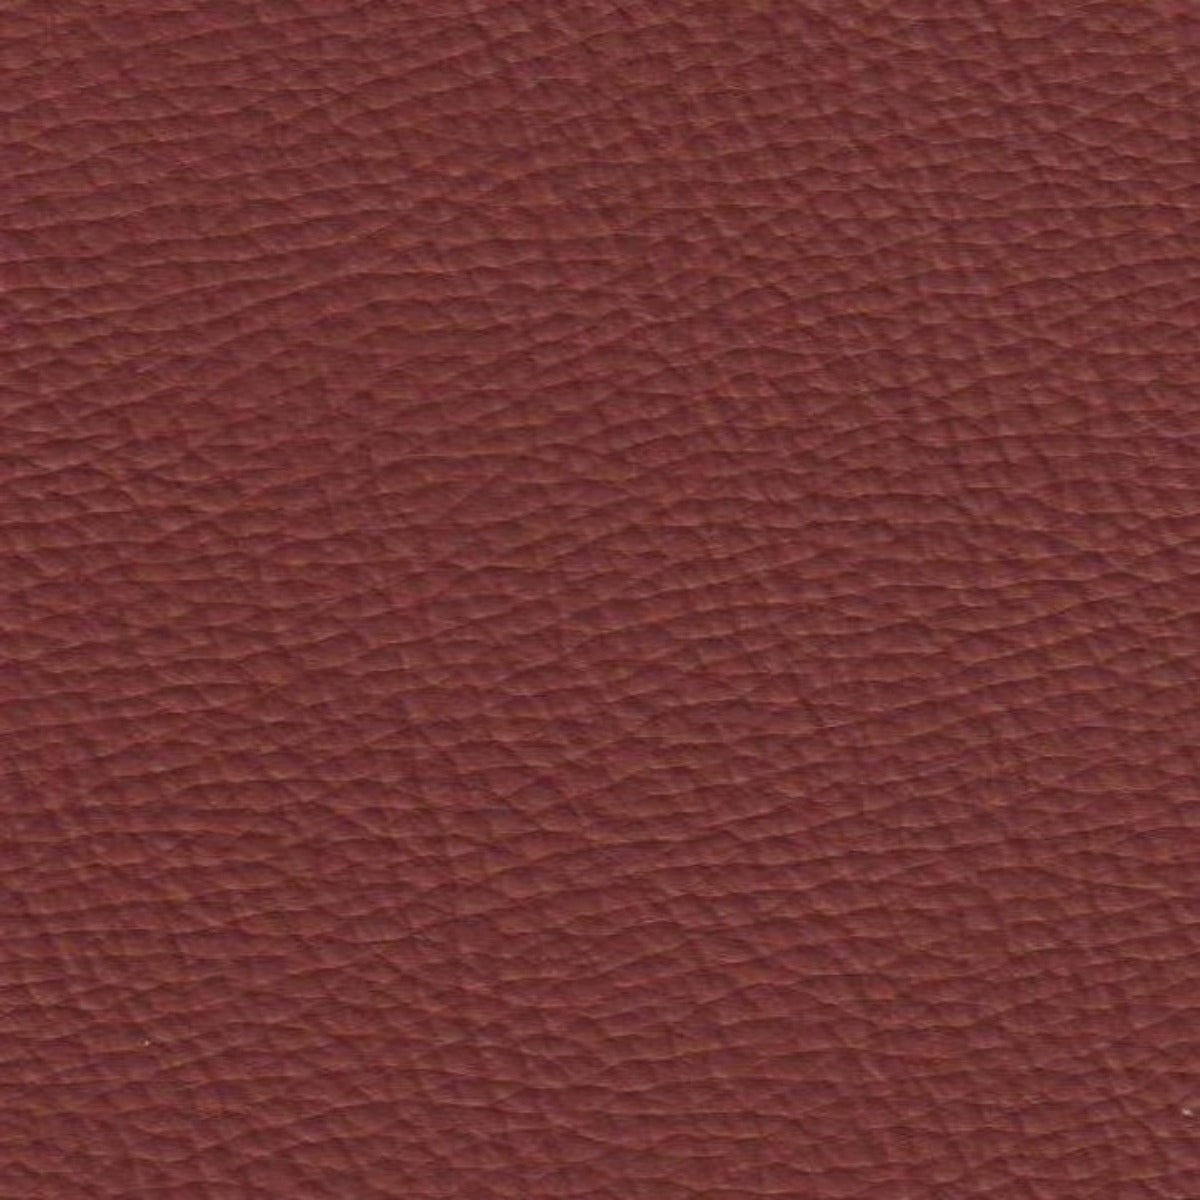 Garnet Burgundy Plain Washed Look Automotive Vinyl Upholstery Fabric